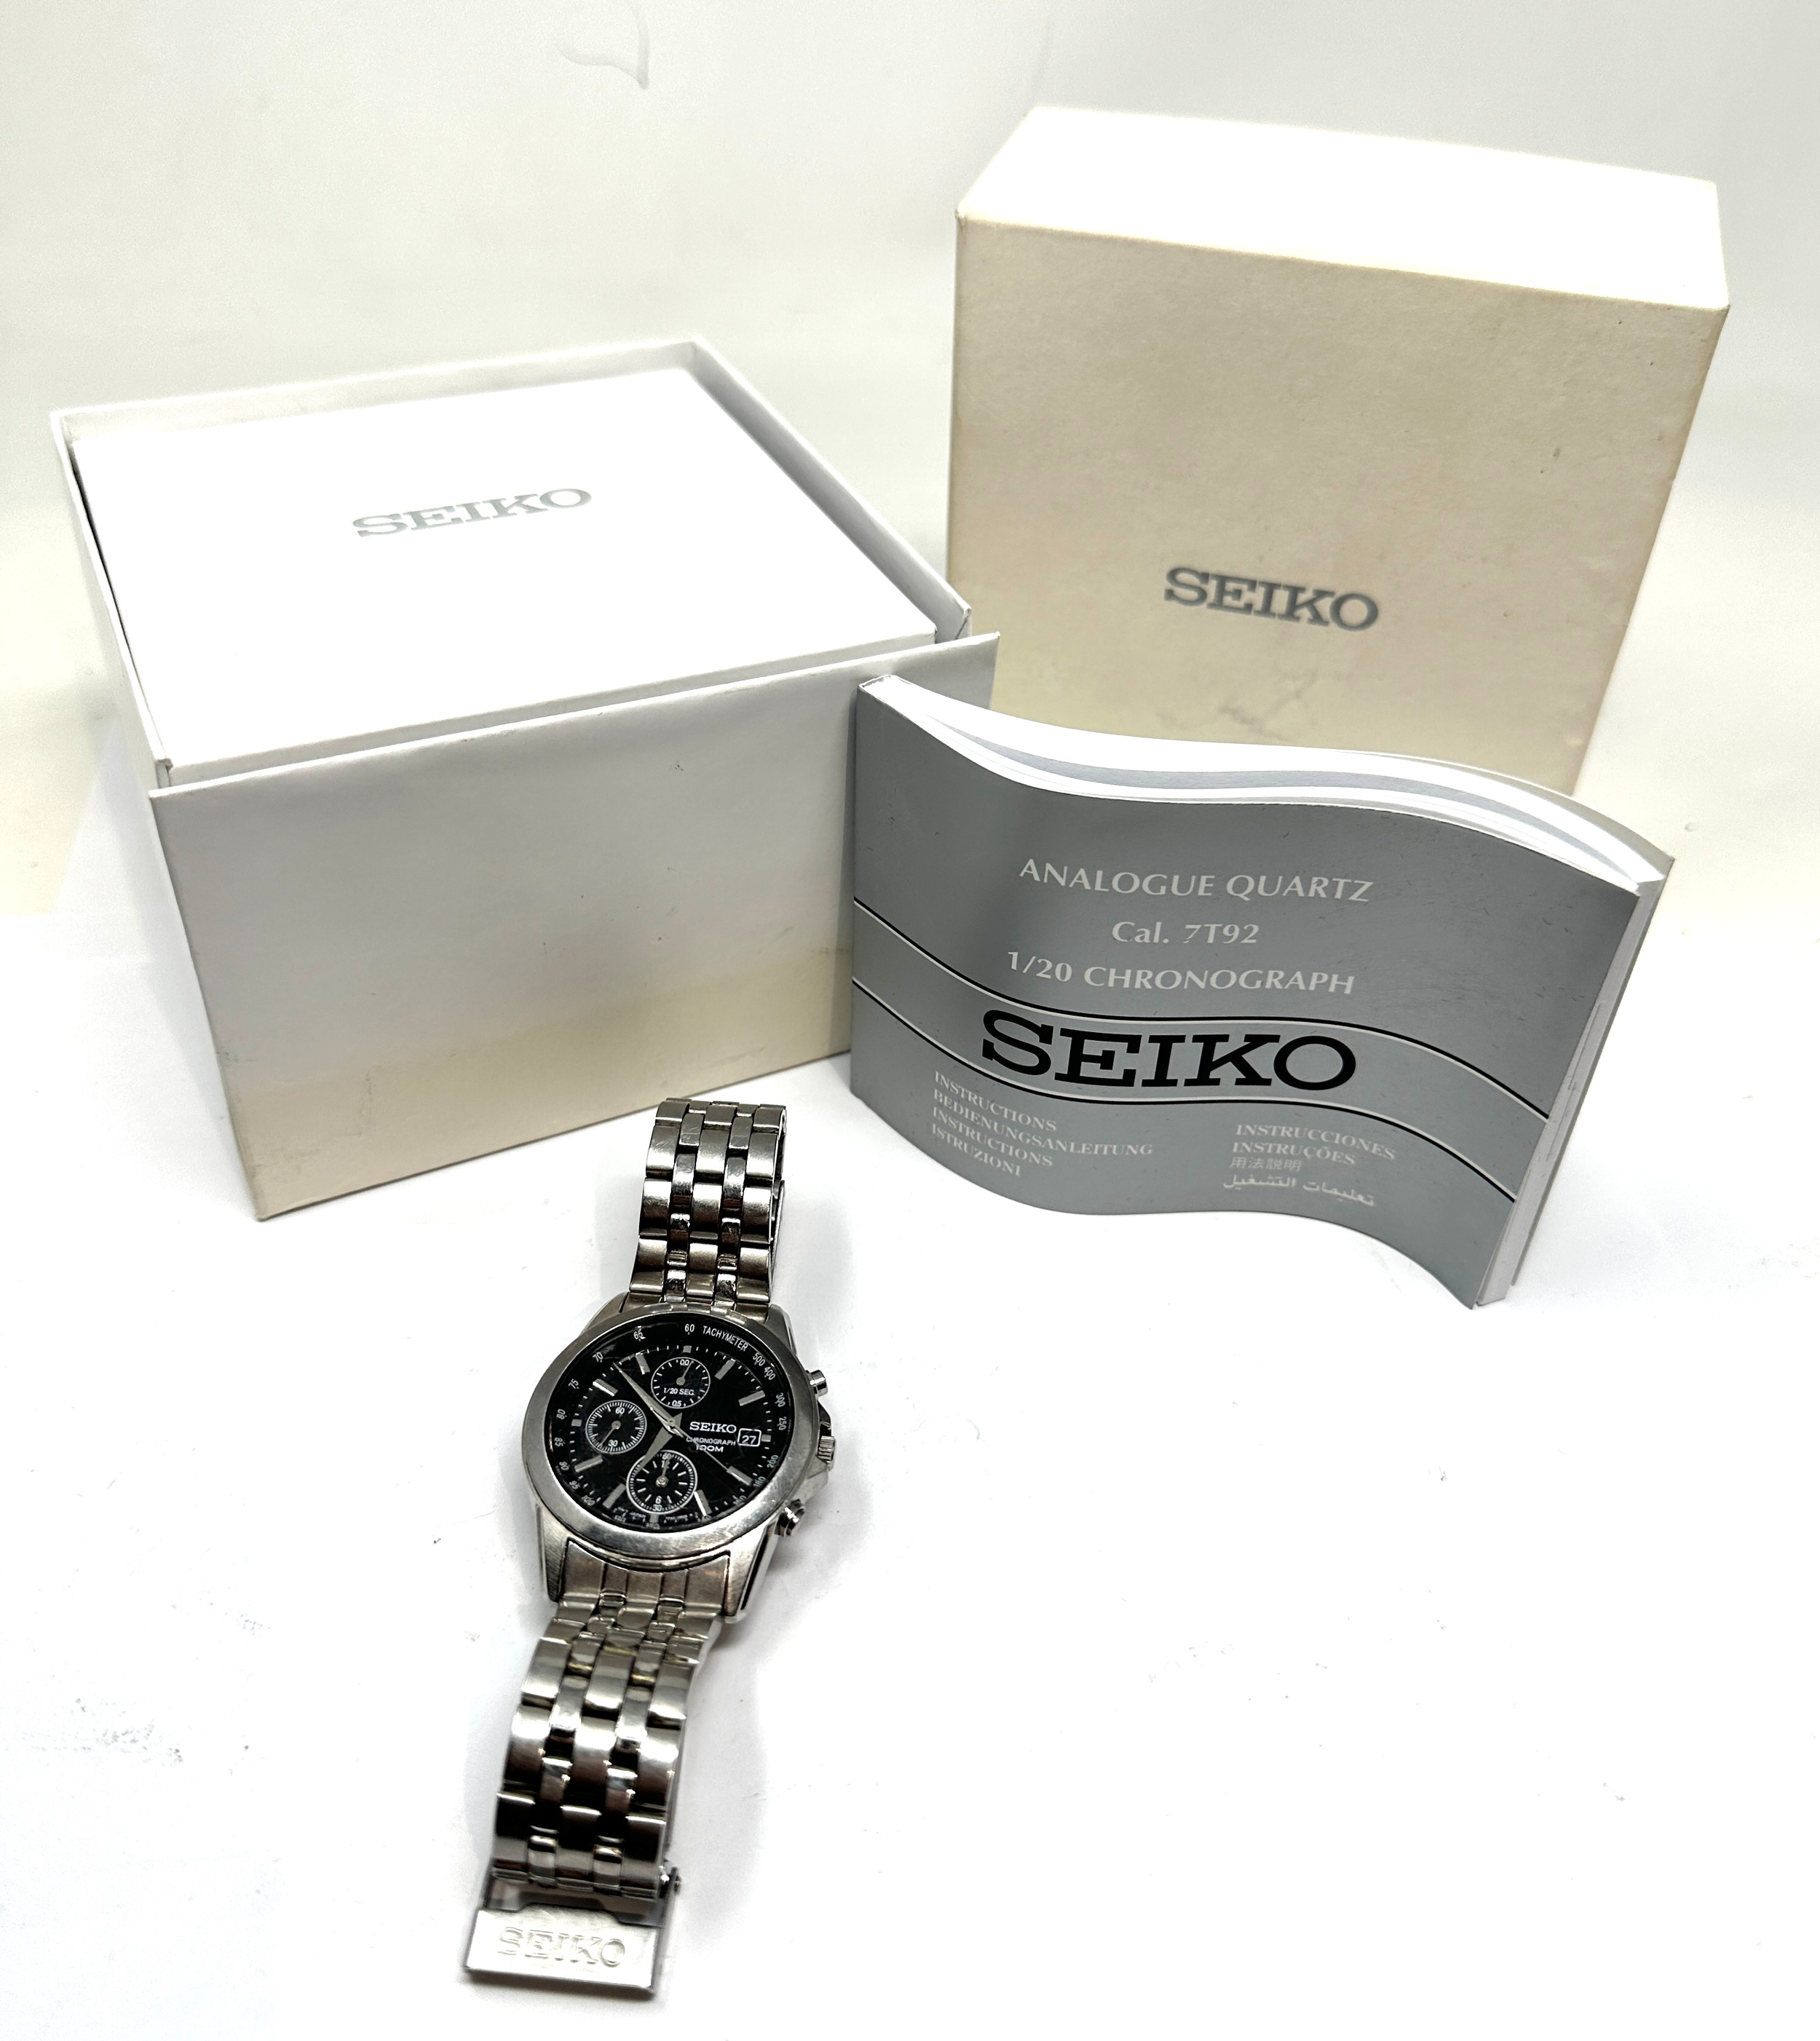 Boxed seiko chronograph 1000m gents quartz wristwatch boxed with booklet spare strap parts